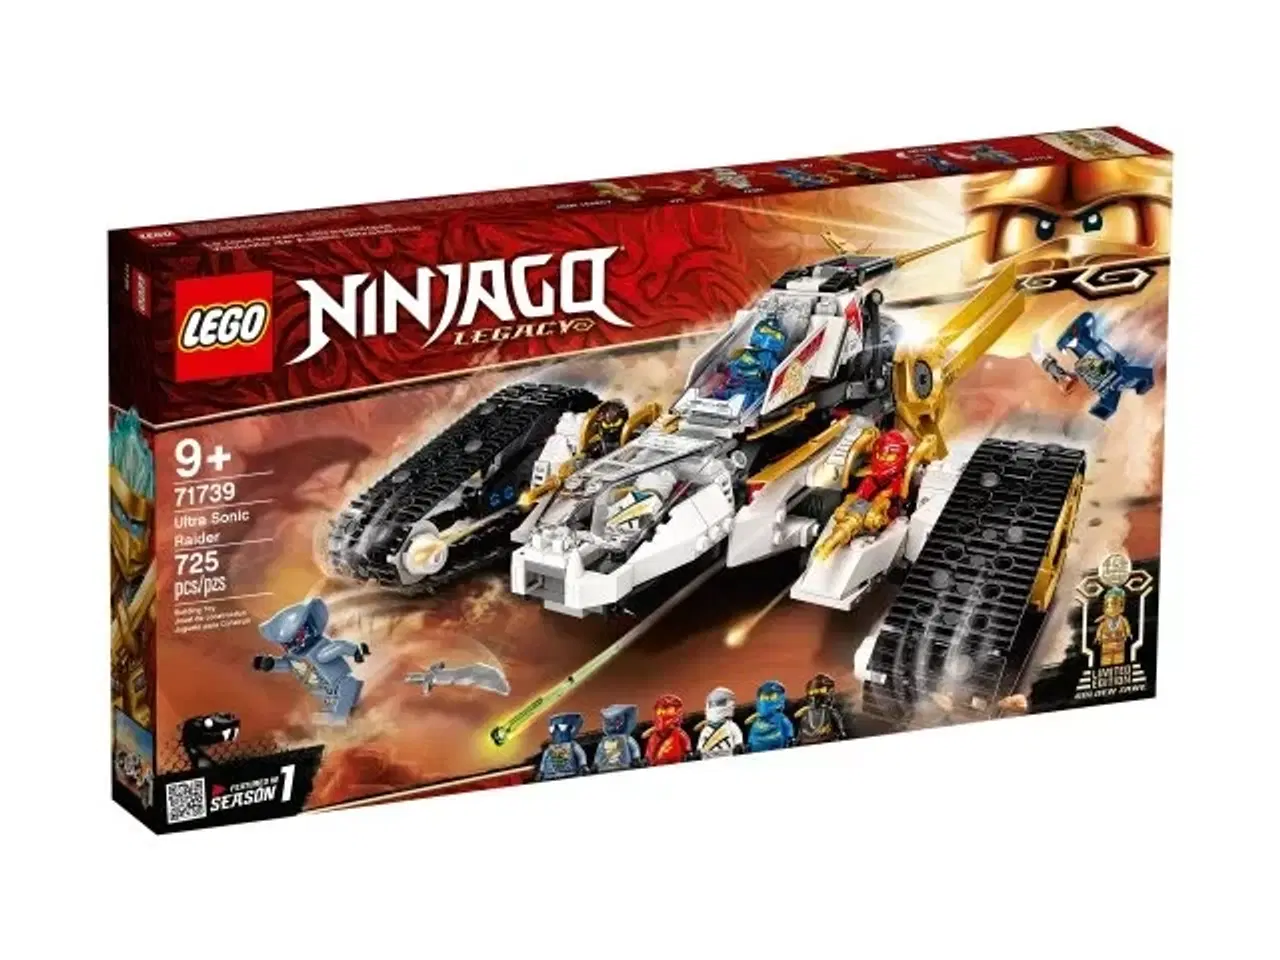 Billede 2 - Lego Ninjago, 71739 Ultra Sonic Raider